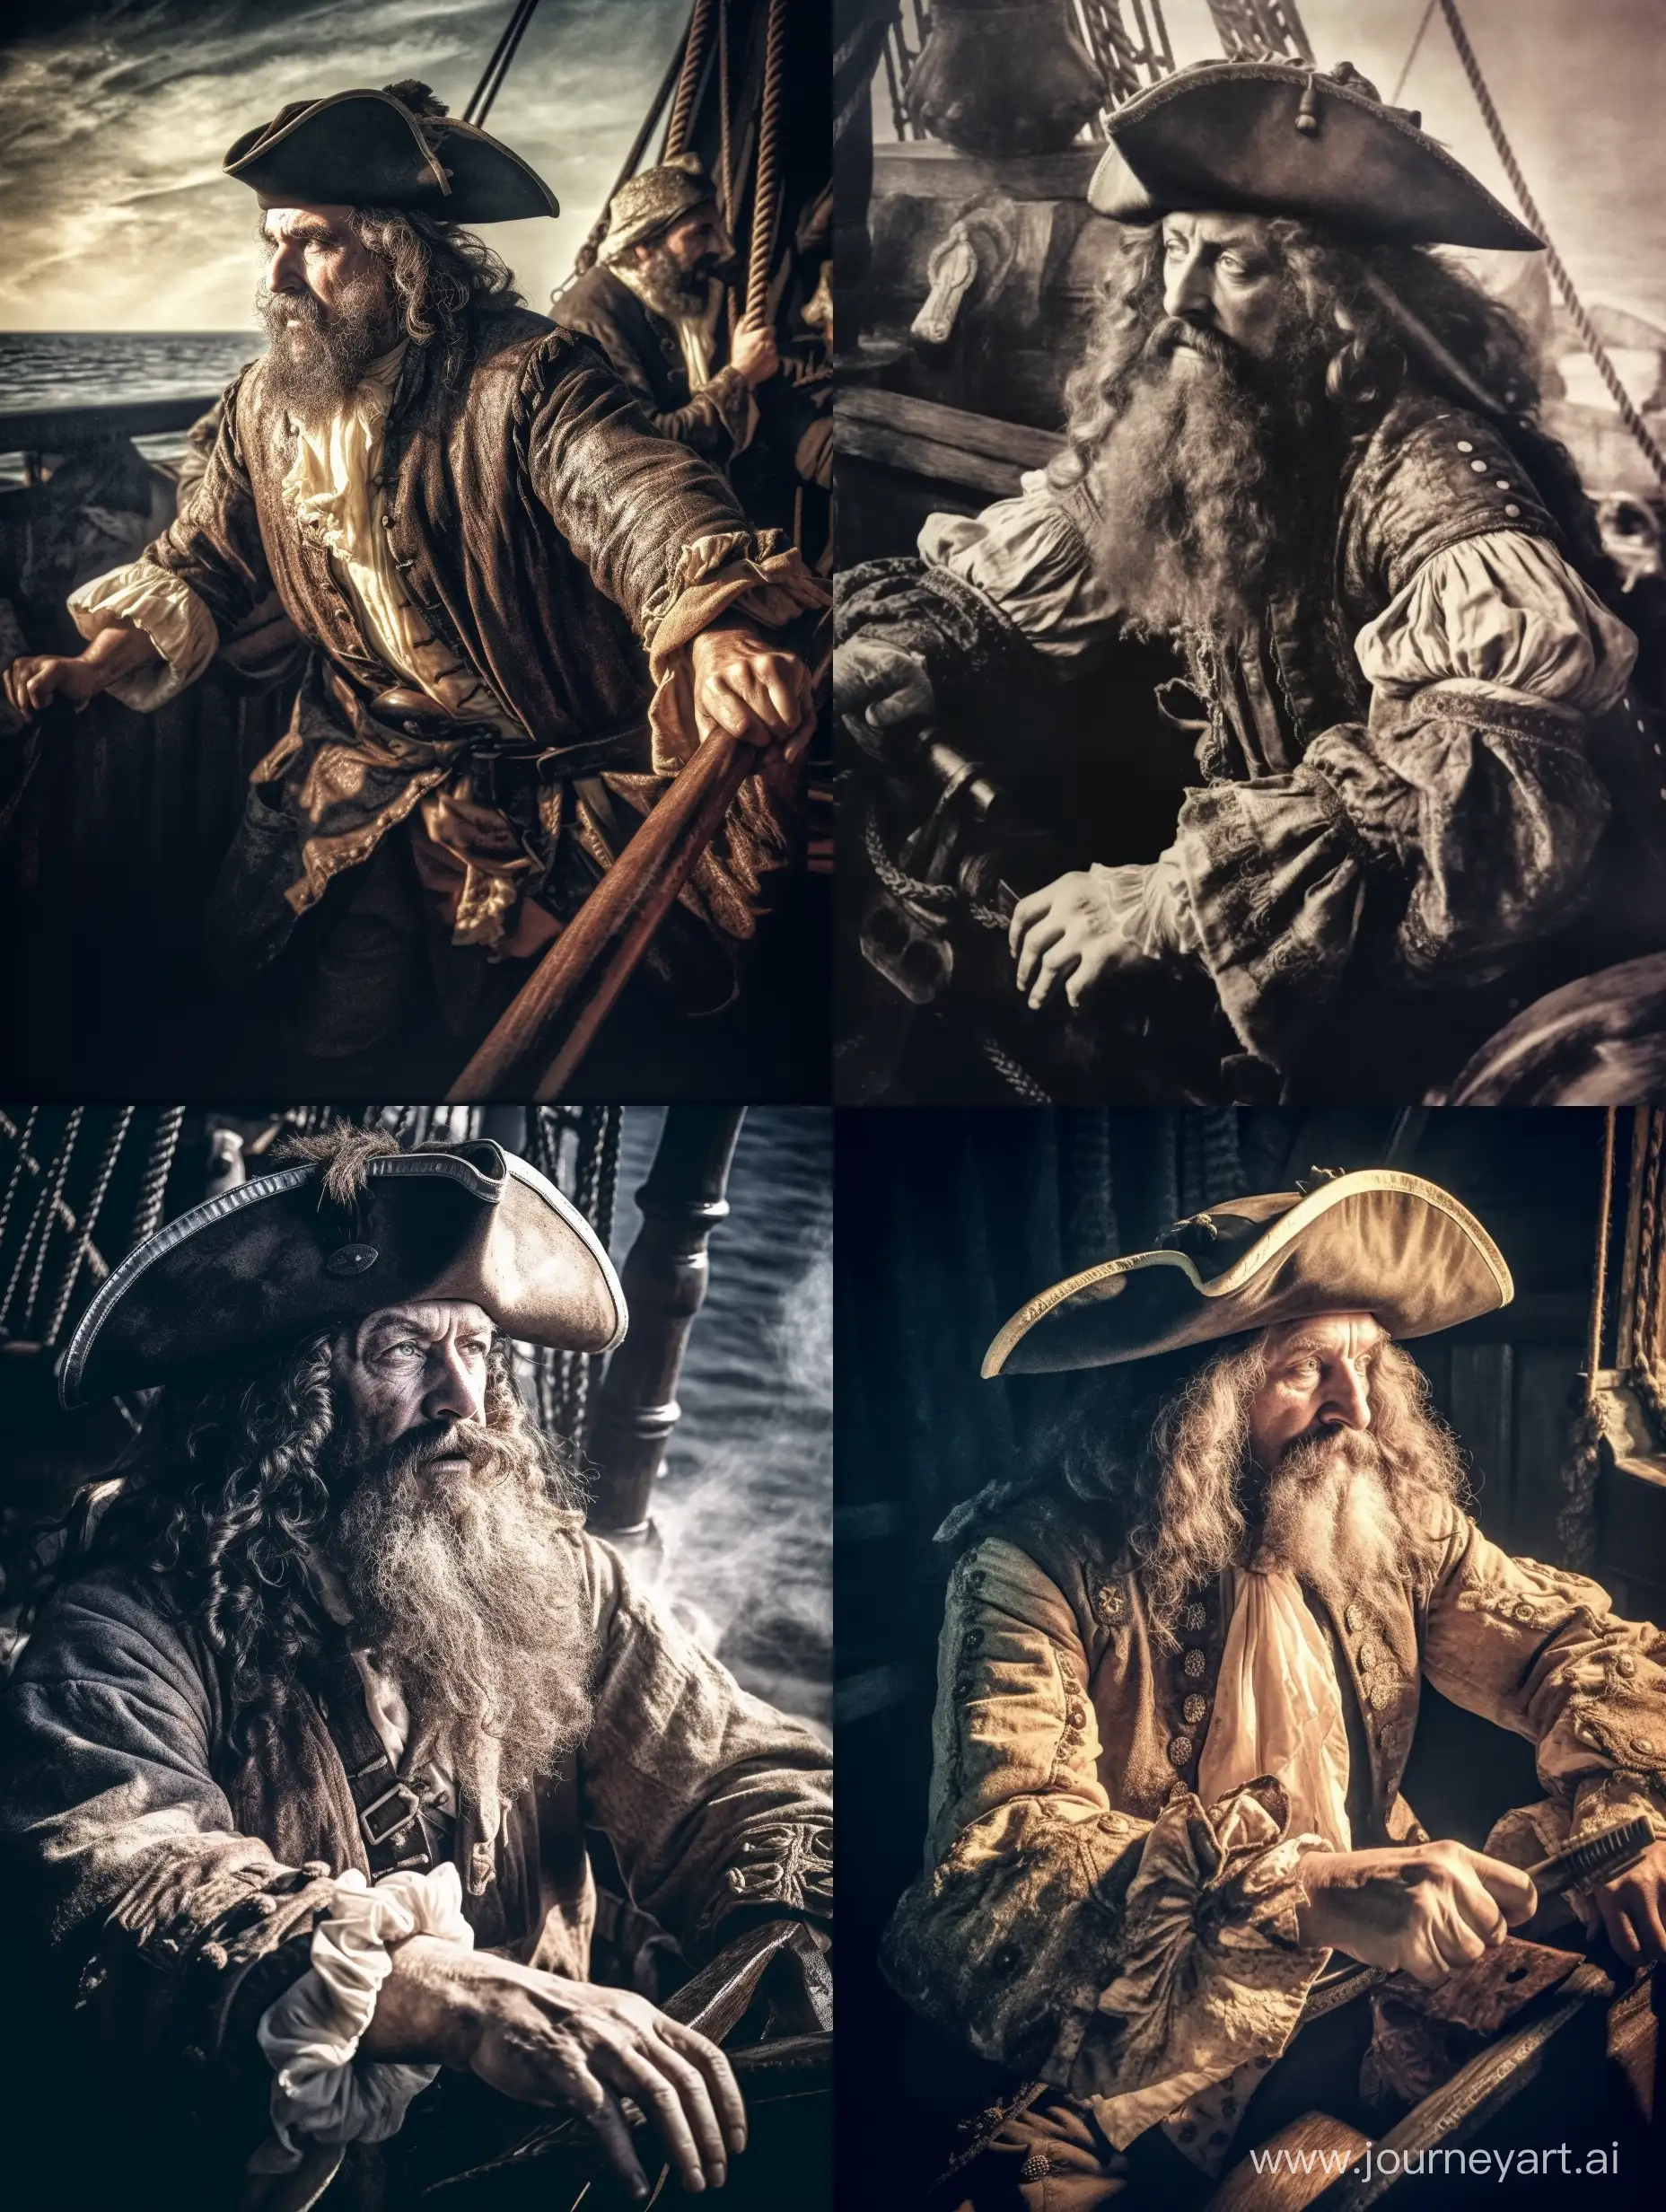 Blackbeards-Terrifying-Plunder-Vintage-Pirate-Attack-Photo-1718